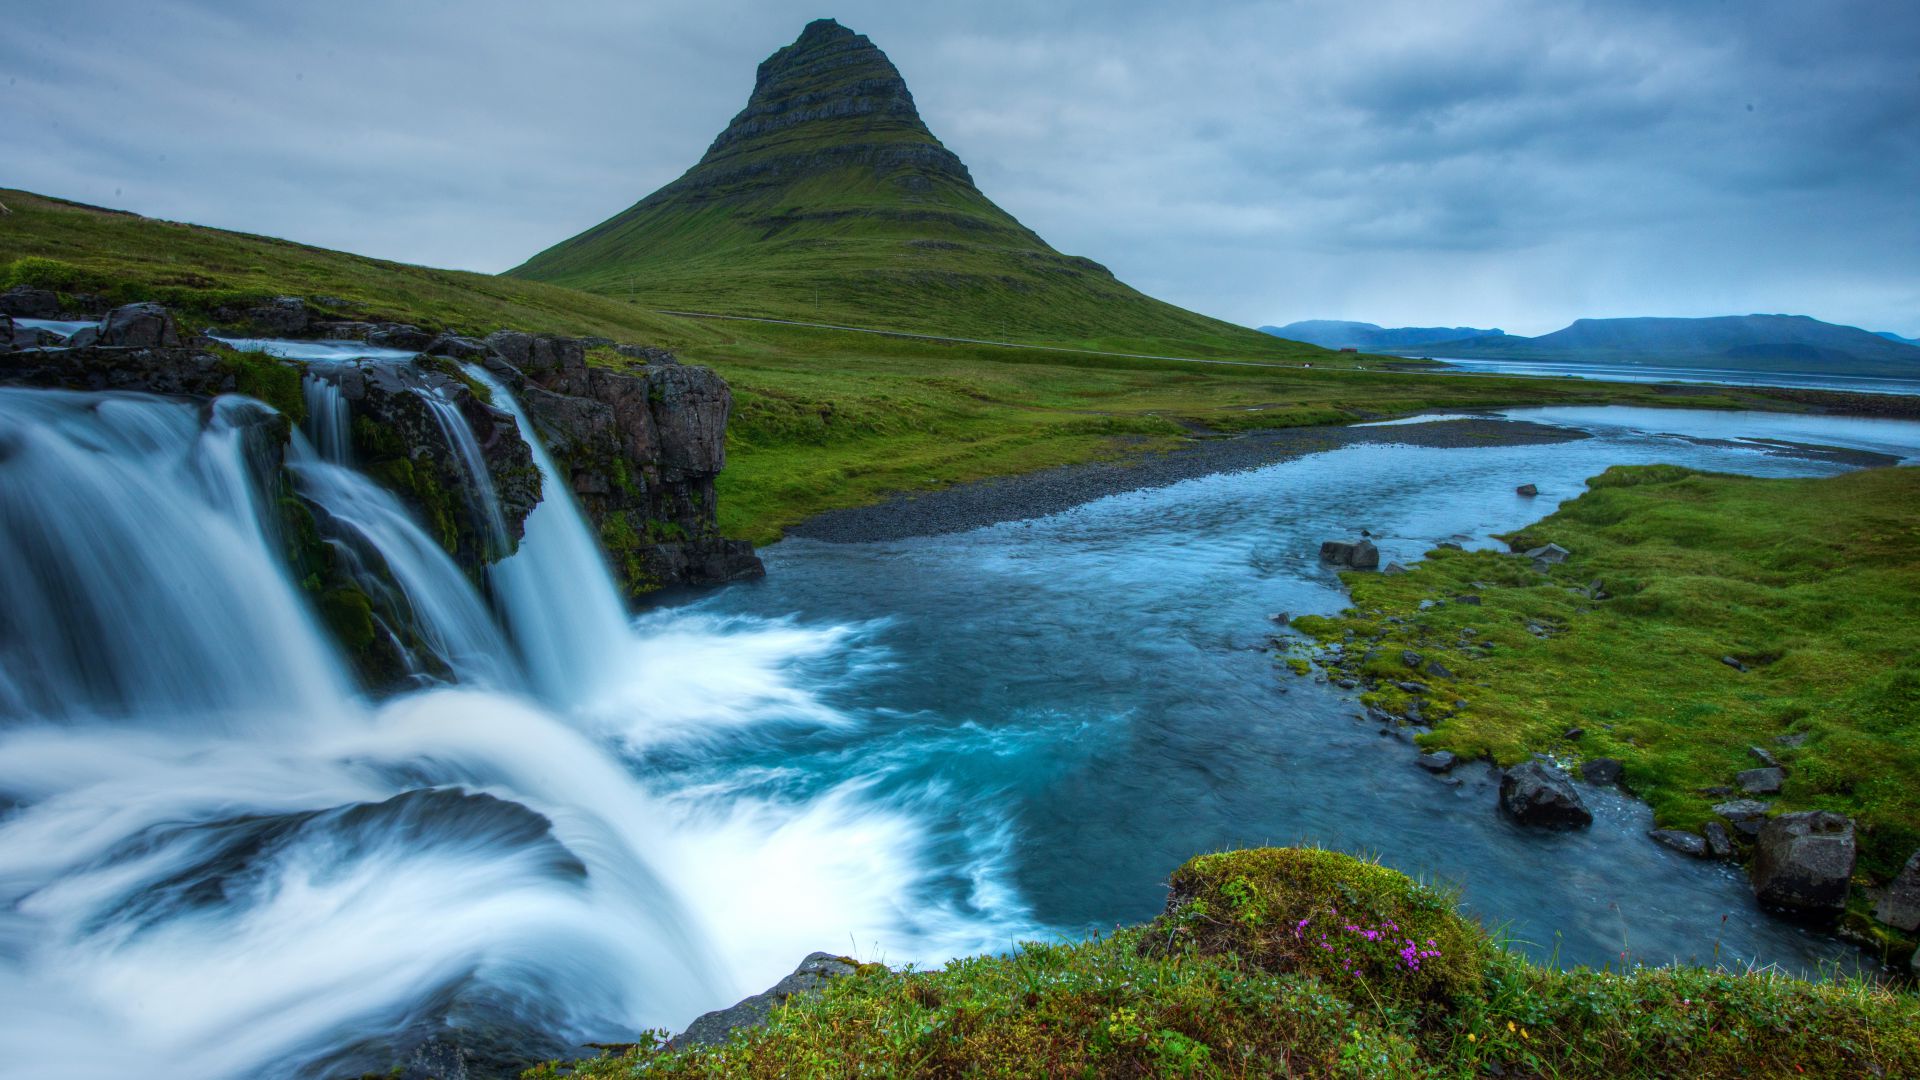 Снайфедльснес, 5k, 4k, Исландия, водопад, горы, река, Snæfellsnes, 5k, 4k wallpaper, Iceland, waterfall, hills, river,  (horizontal)